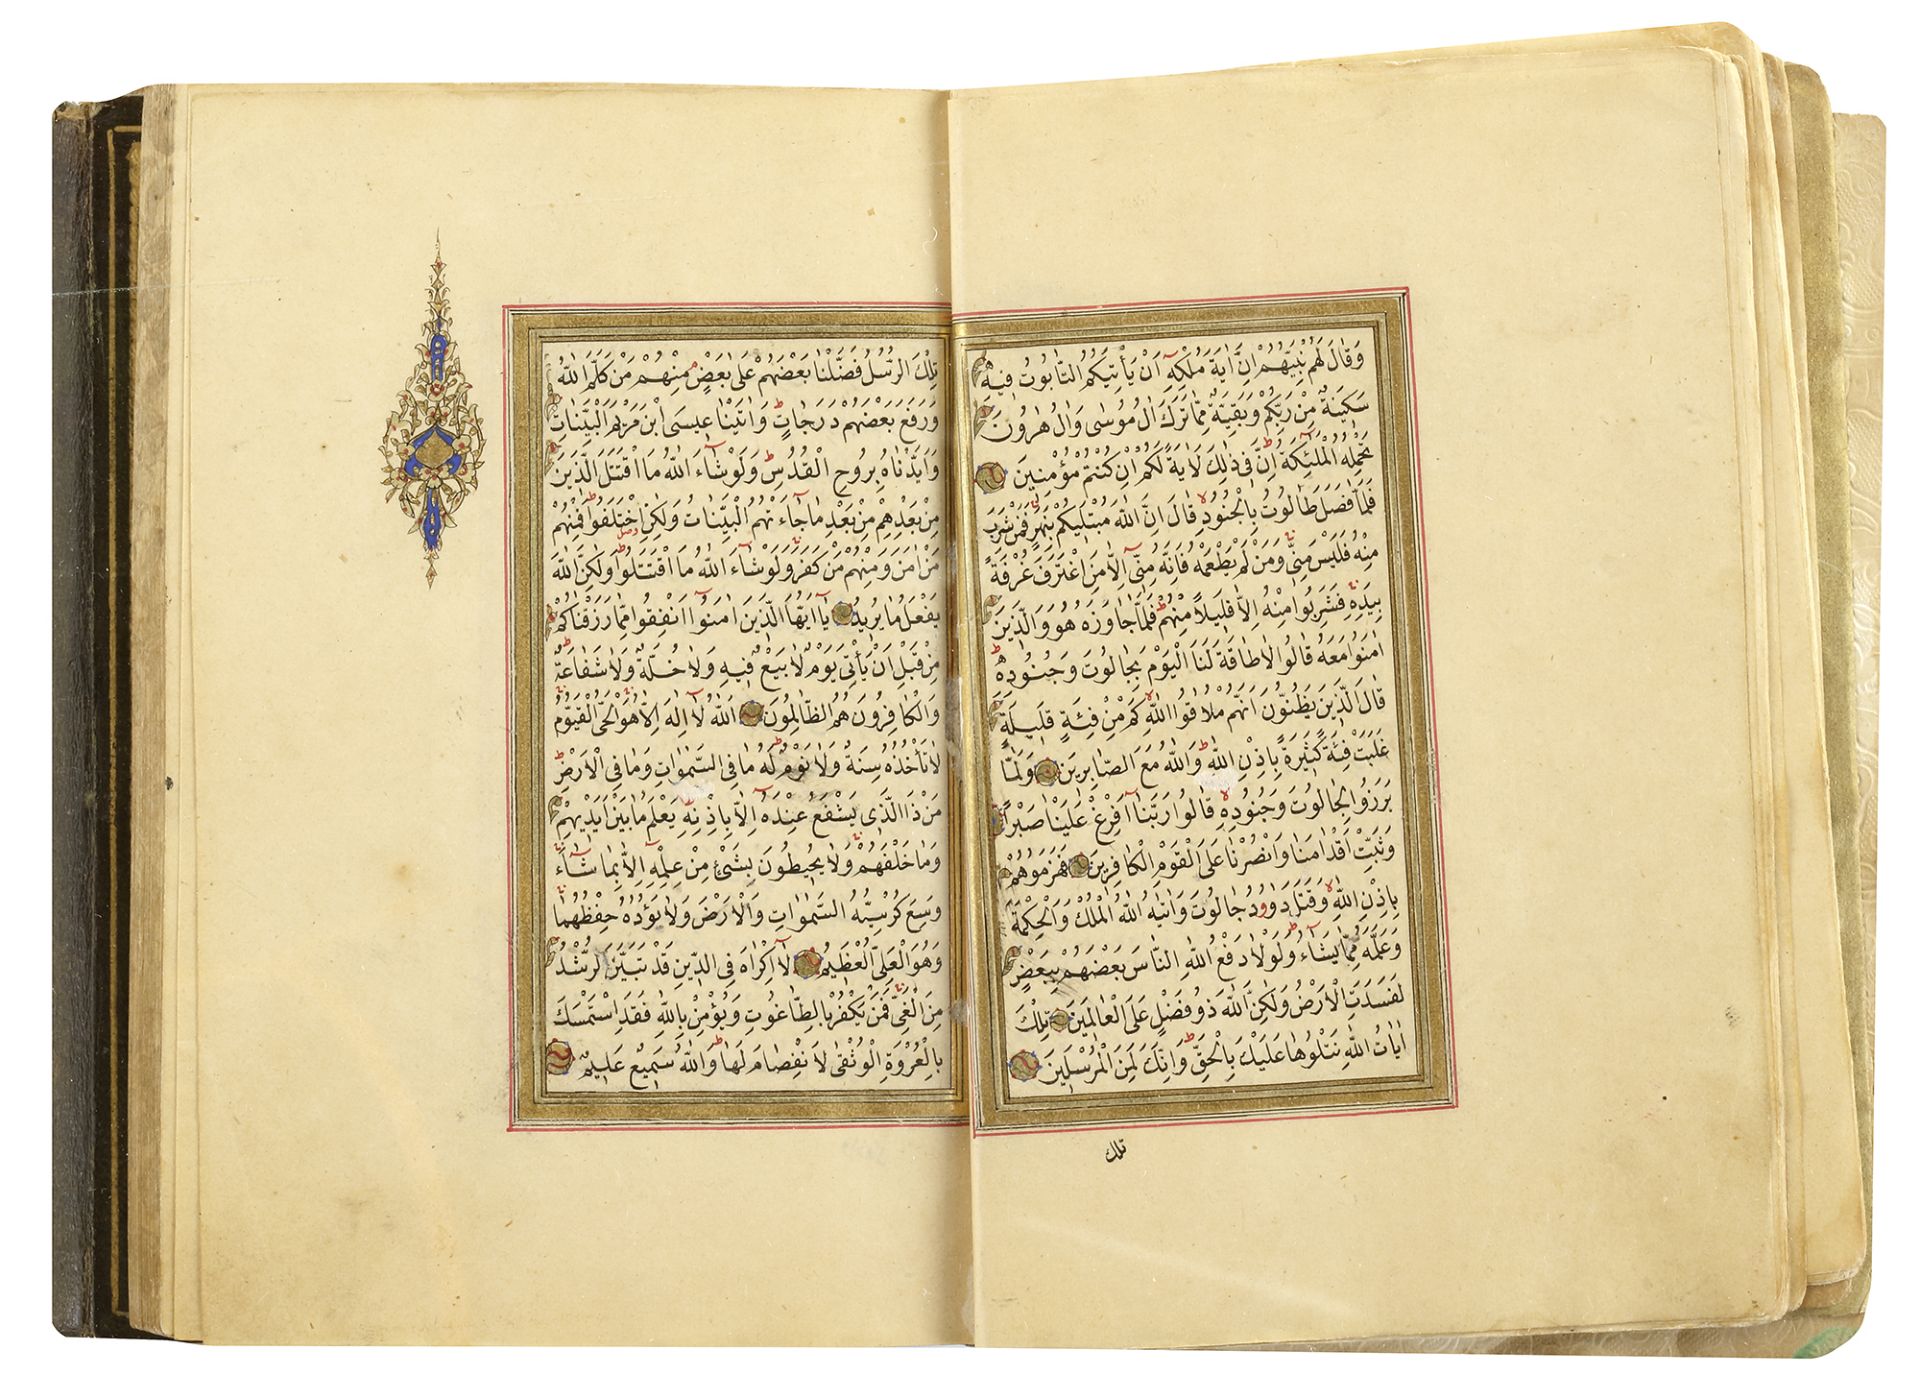 AN ILLUMINATED QURAN COPIED BY ISMA'IL BIN 'UMAR QALBAWI, OTTOMAN PROVINCIAL, DATED 1171 AH/1757-58 - Image 5 of 5